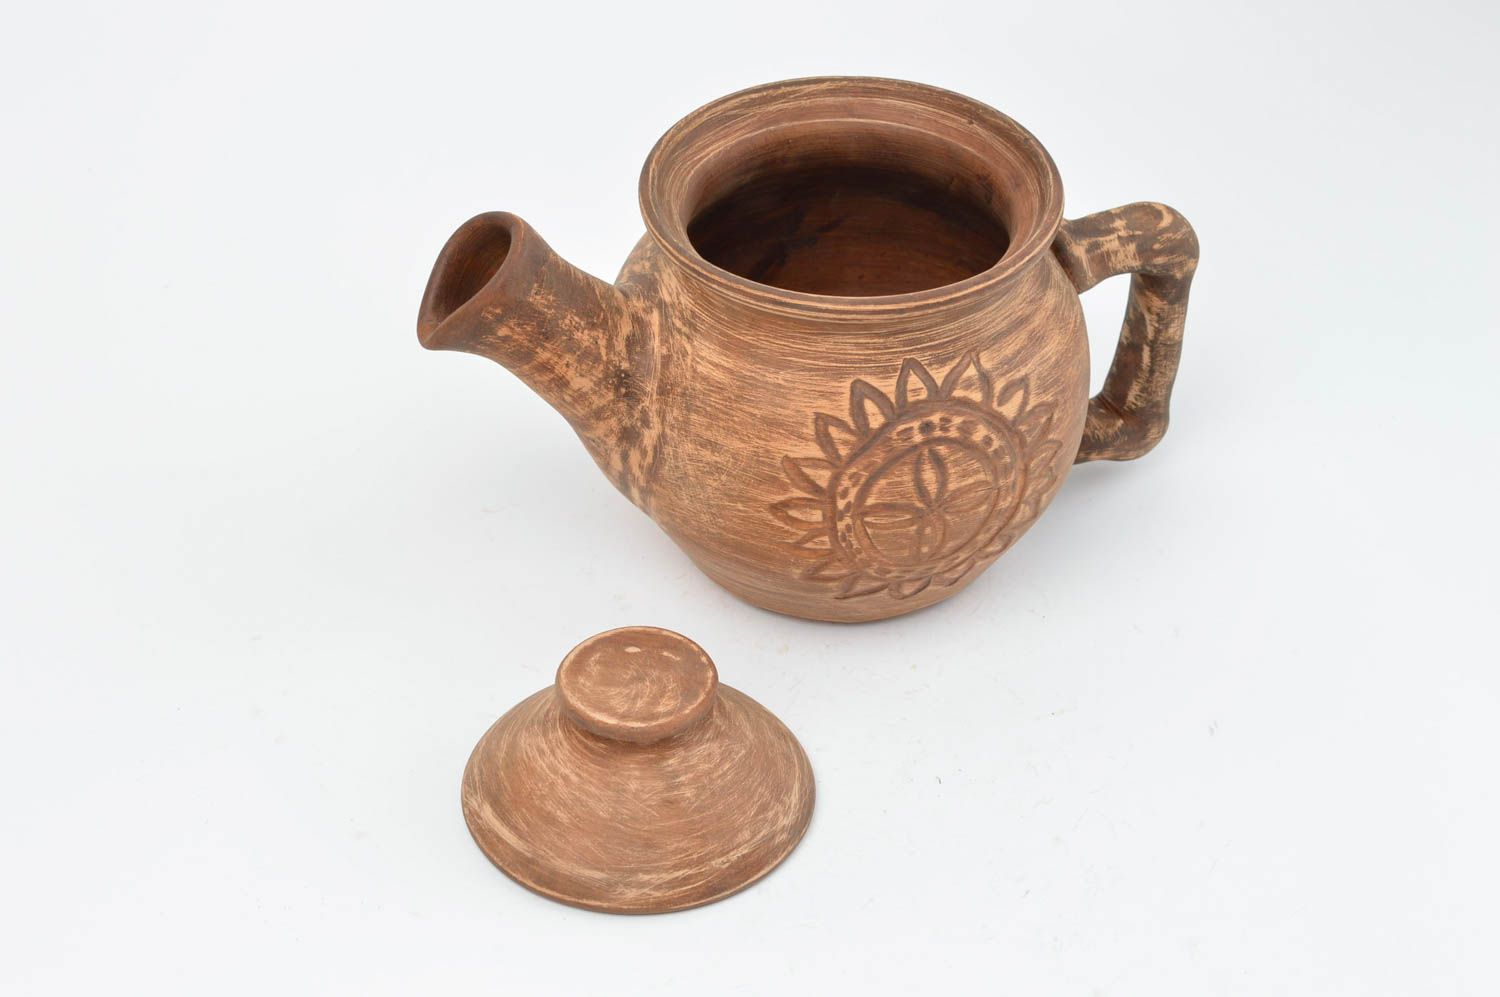 Unusual handmade ceramic teapot designer clay teapot table setting ideas photo 3